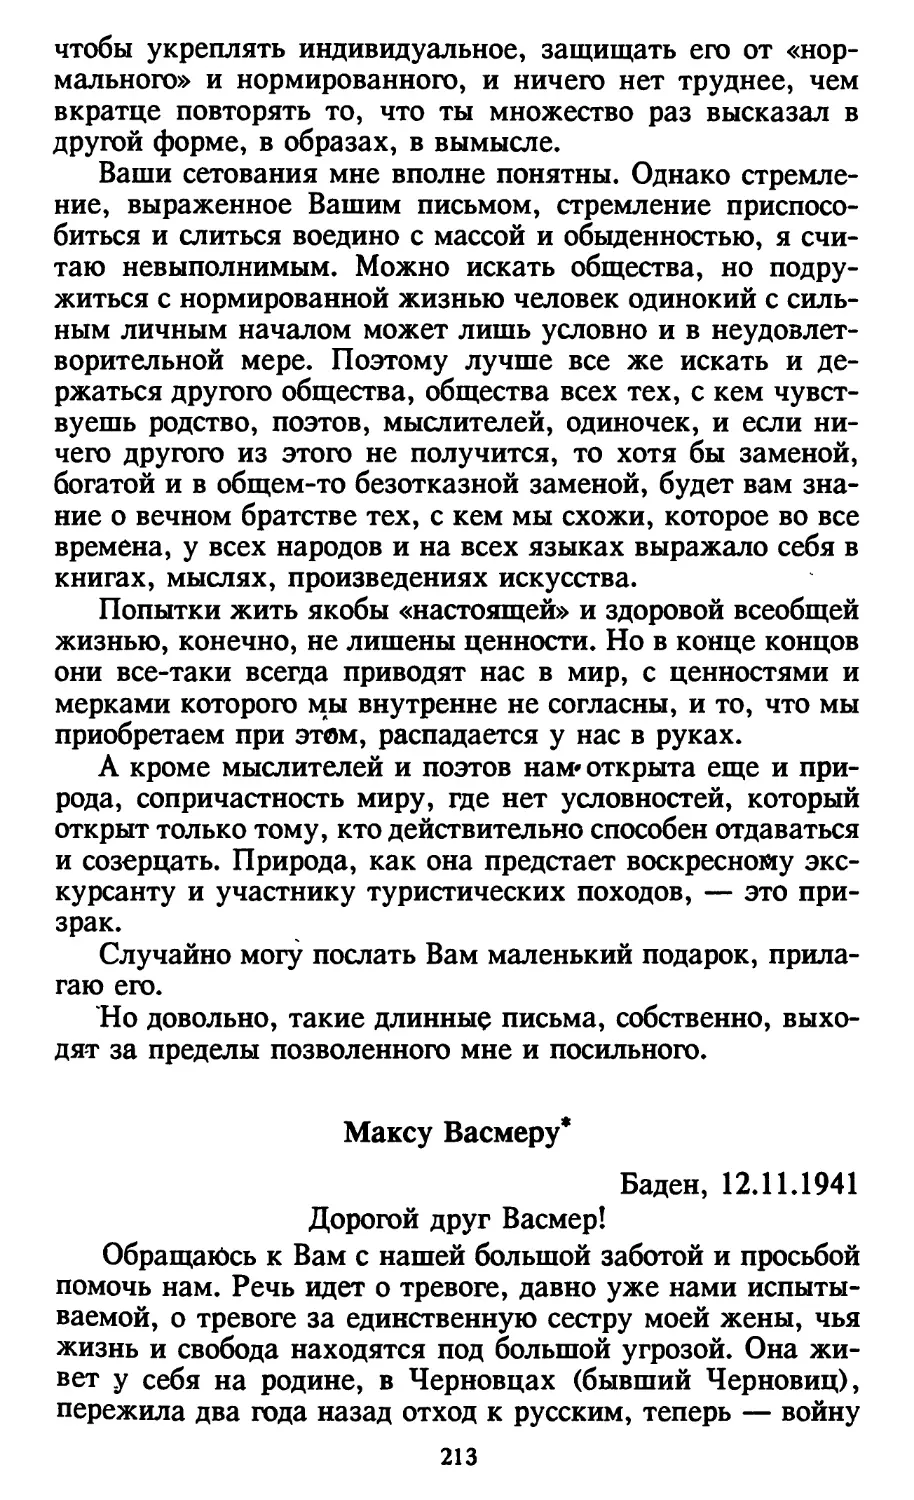 Максу Васмеру. 12.11.1941